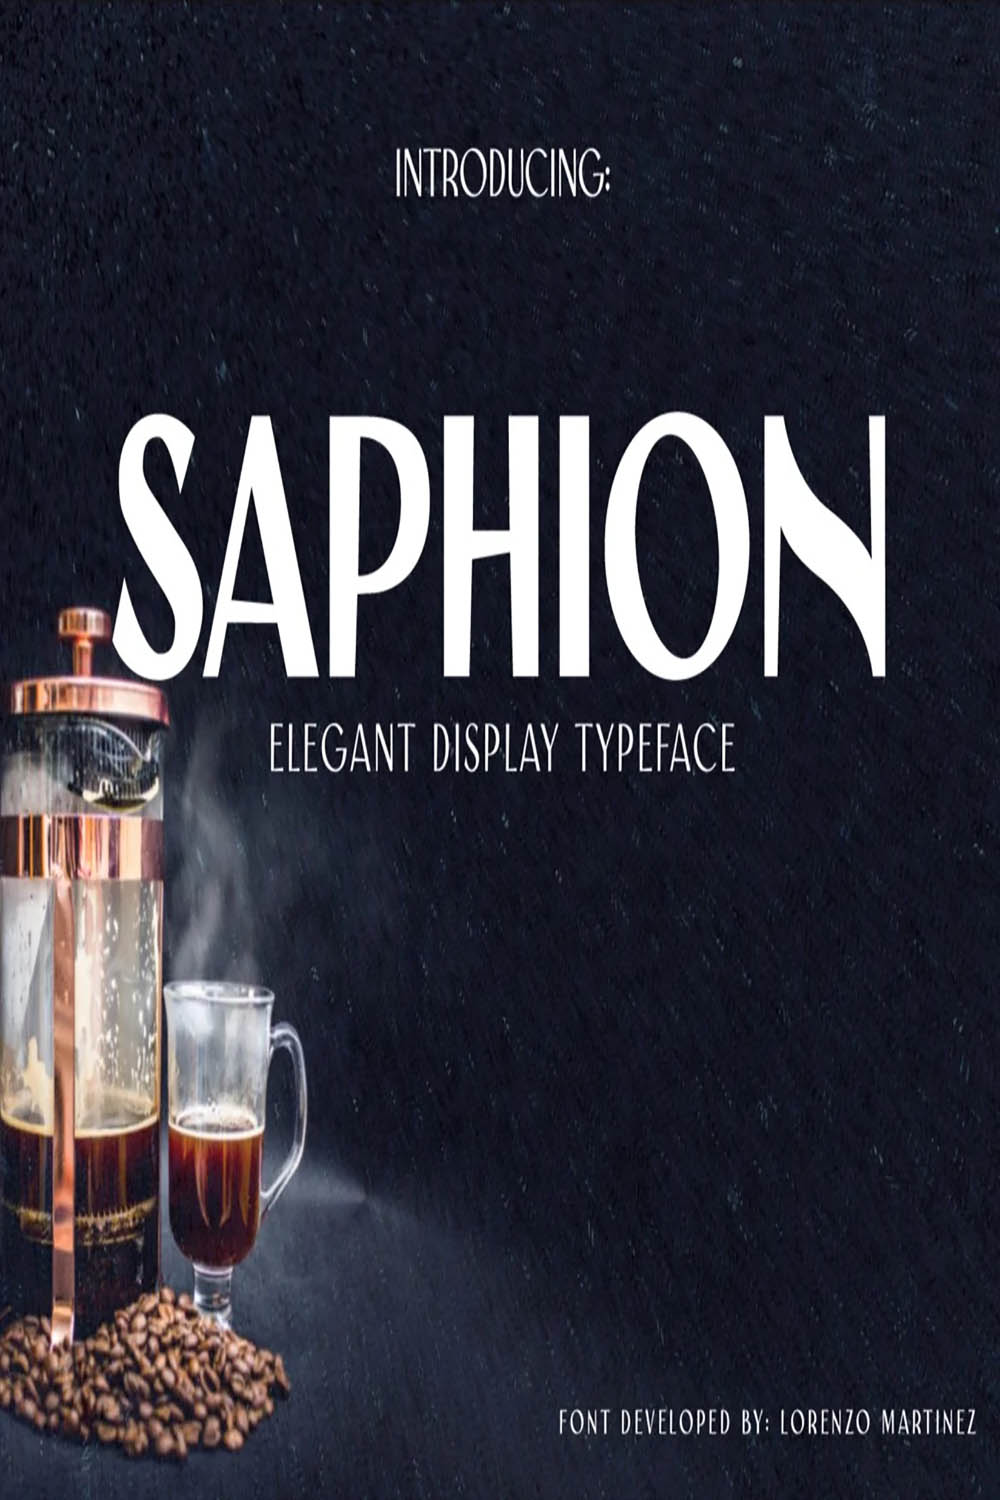 Saphion Typeface pinterest preview image.